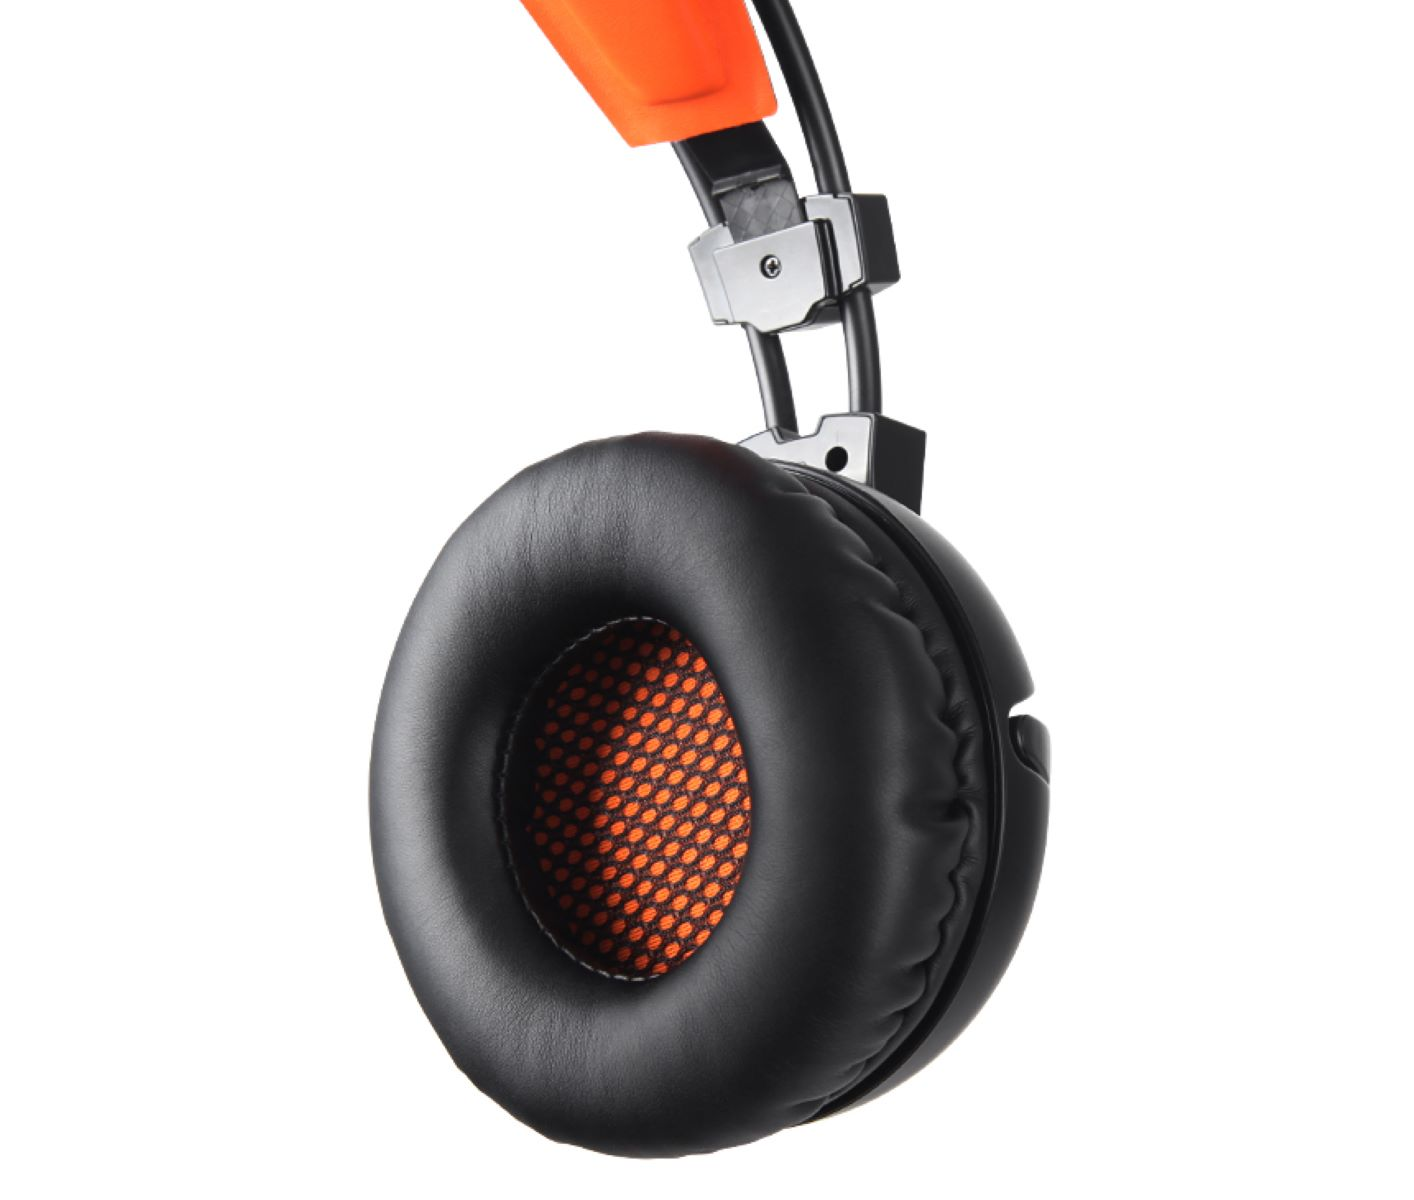 SADES A6, Over-ear Headset schwarz/orange Gaming